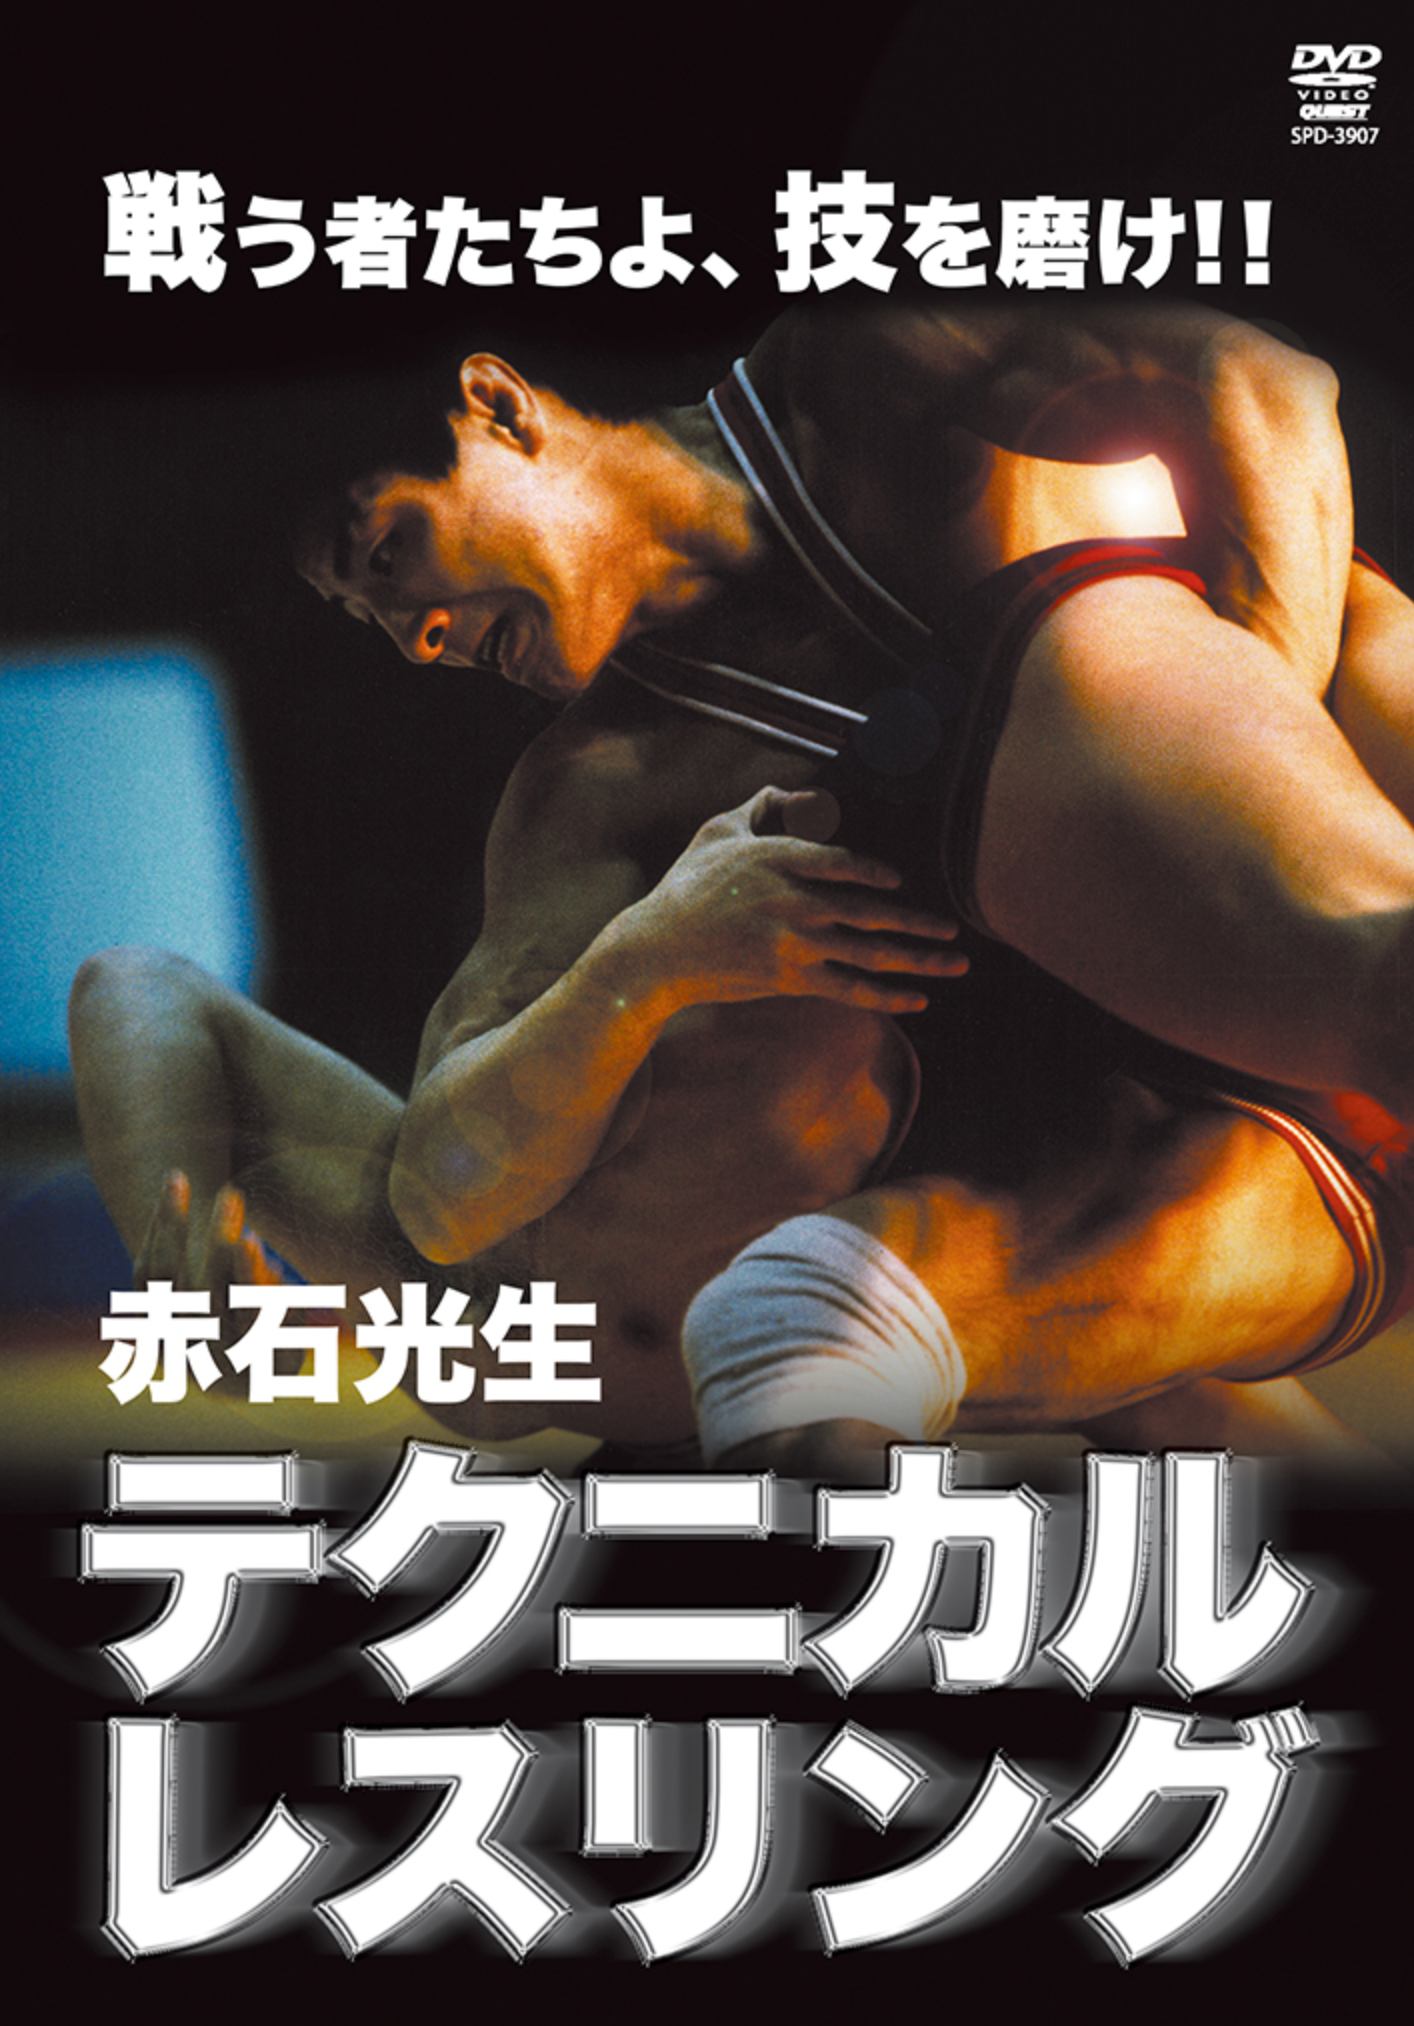 Technical Wrestling DVD by Kosei Akaishi - Budovideos Inc